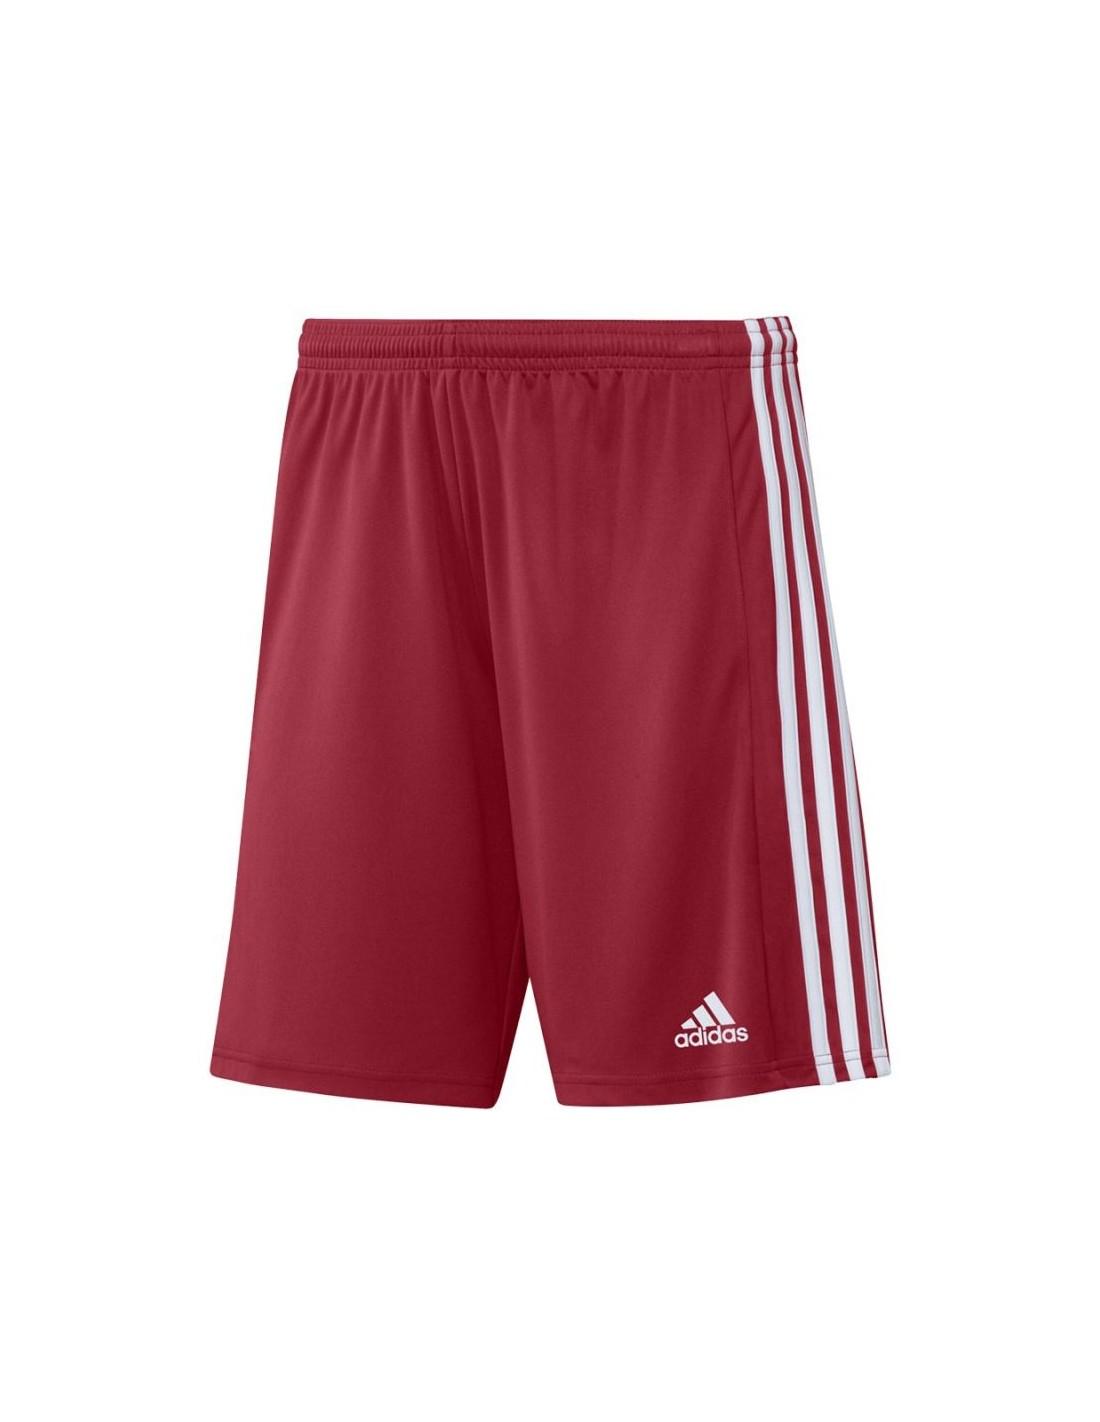 Short Adidas Squad 21 Acetato Rojo/Blanco Hombre